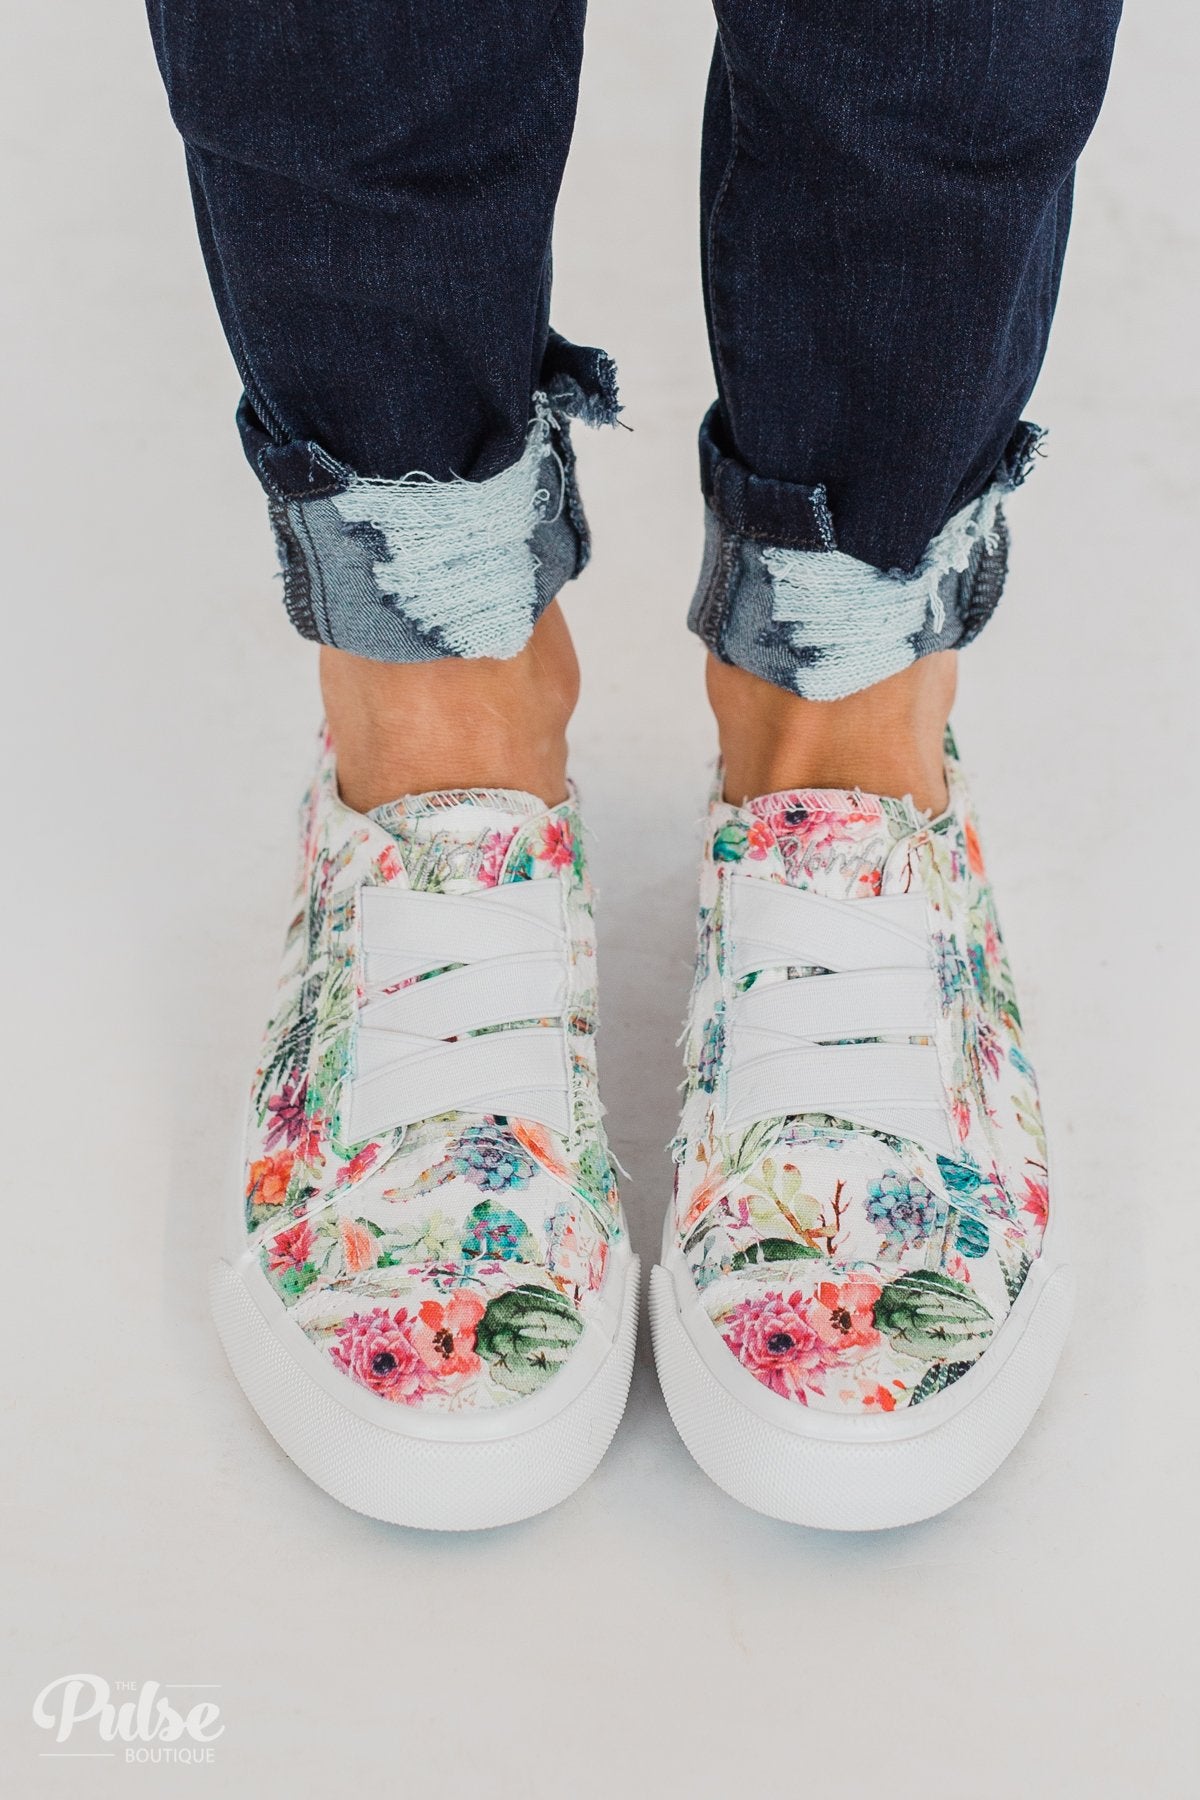 blowfish floral sneakers